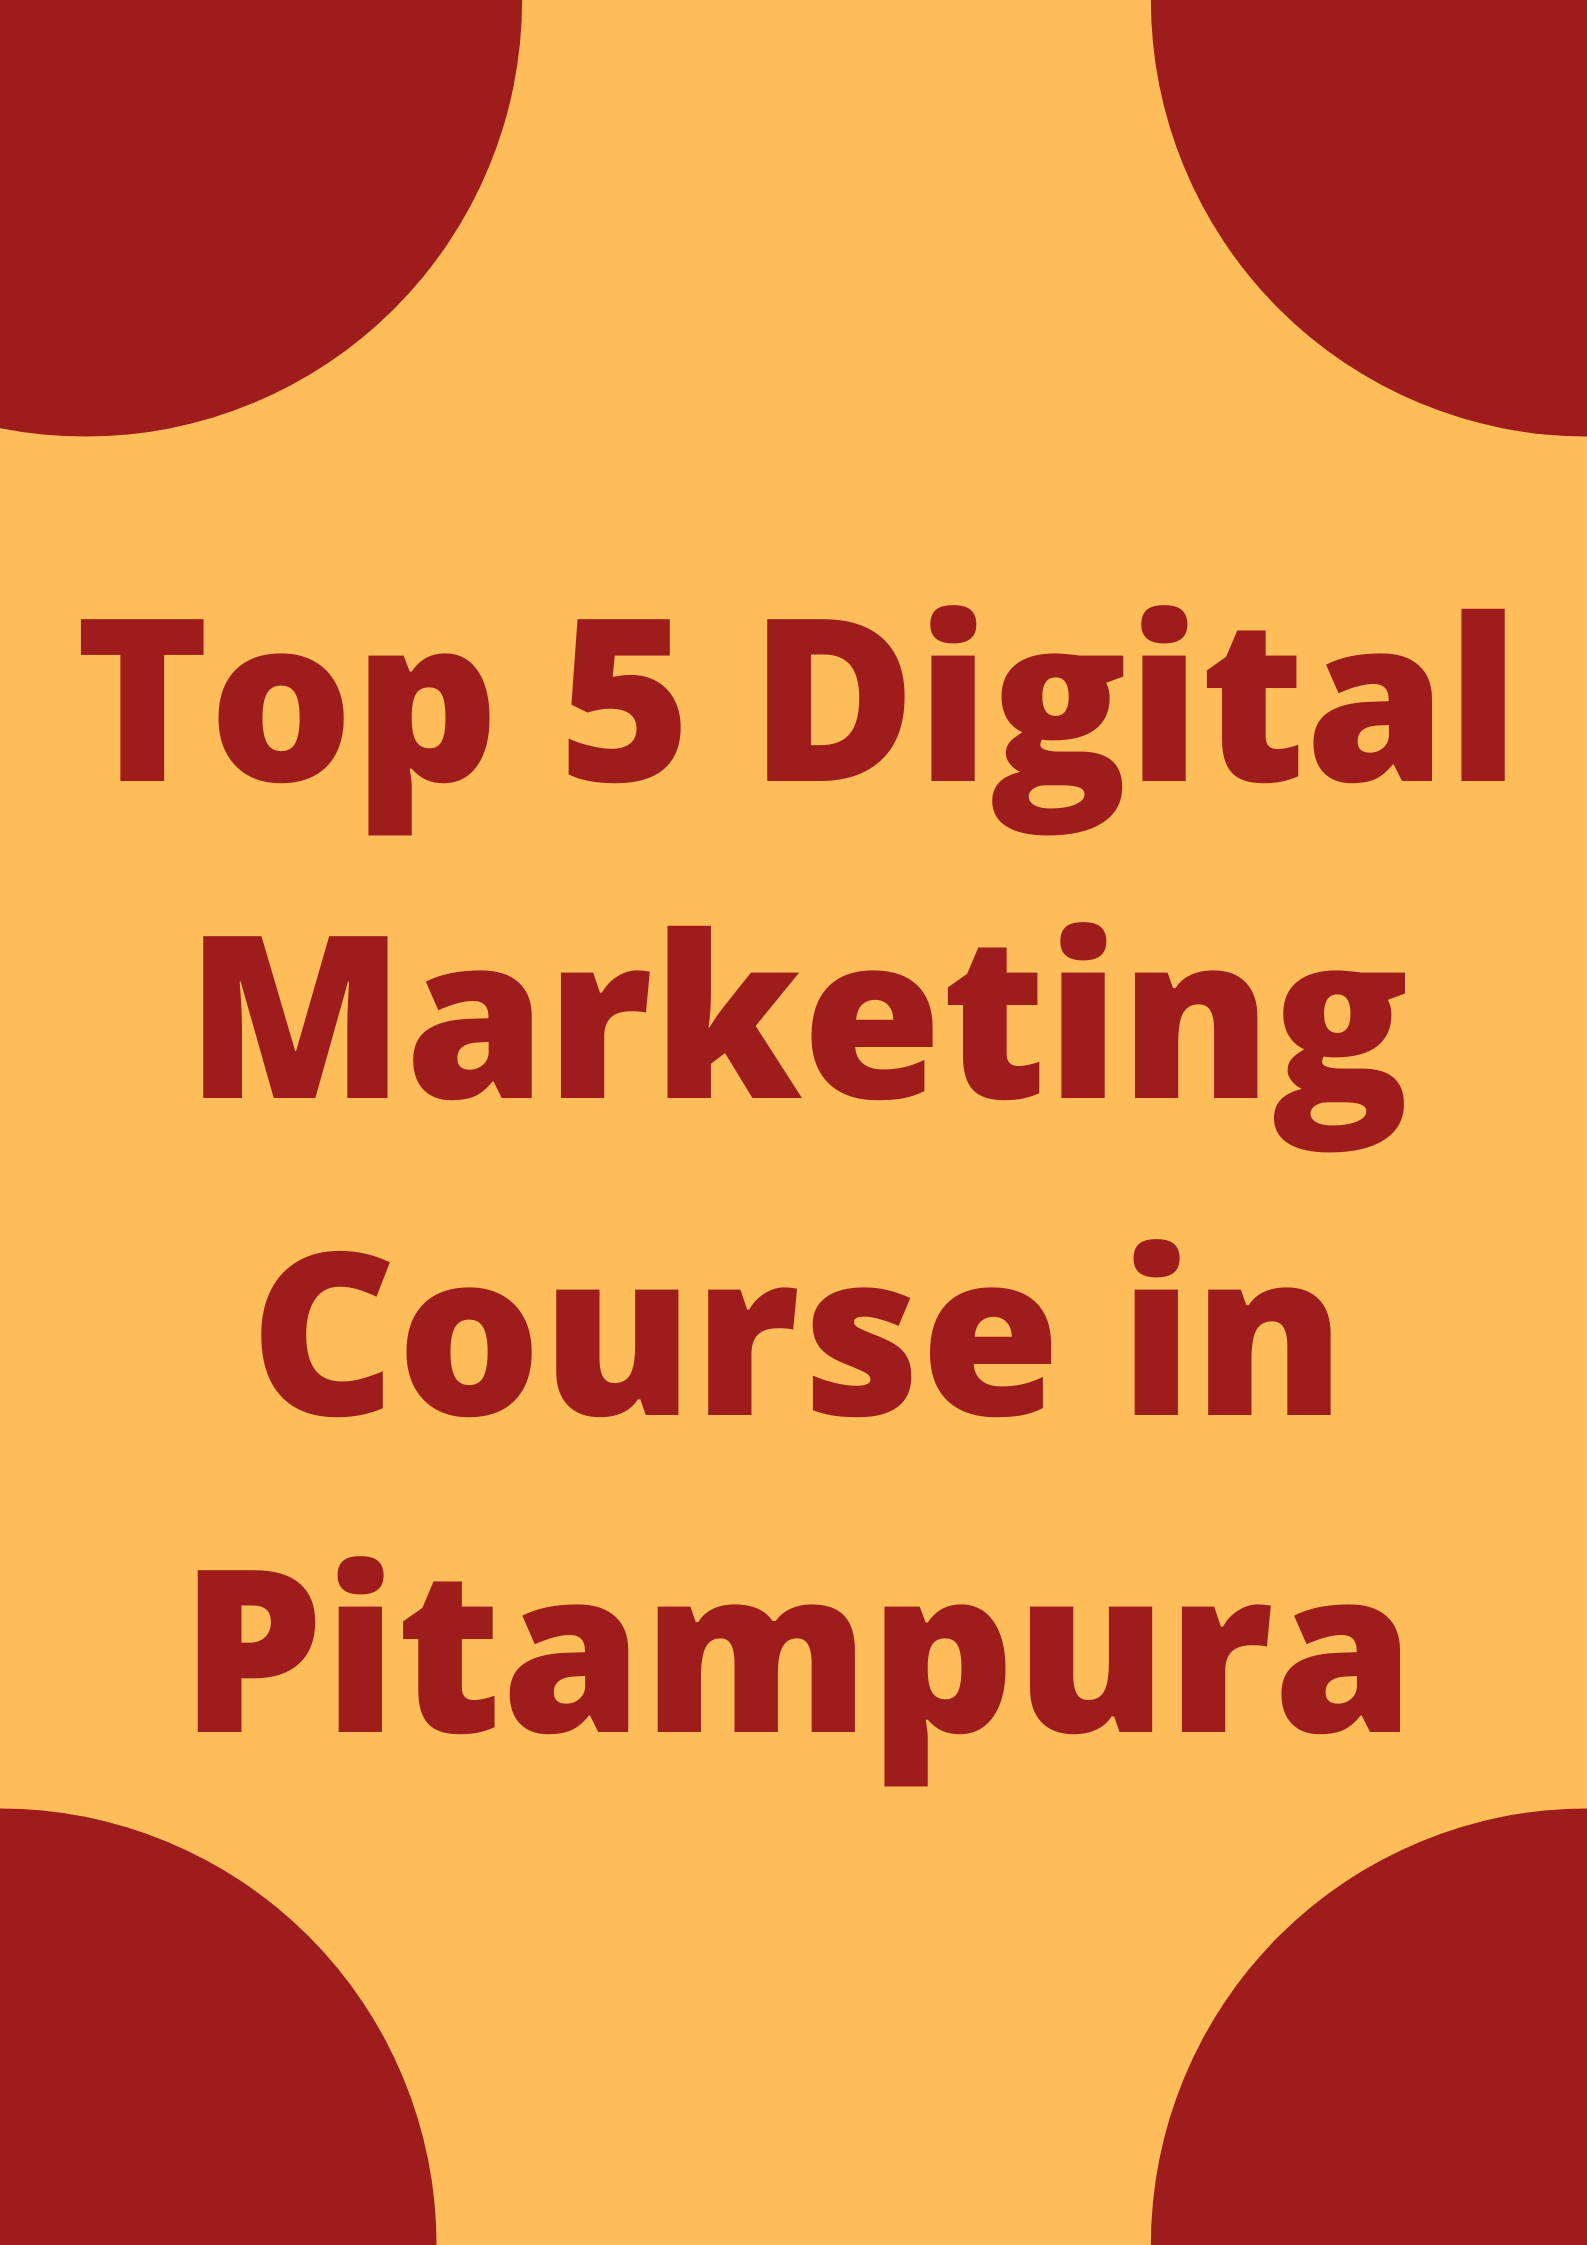 Top 5 Digital Marketing Course in Pitampura